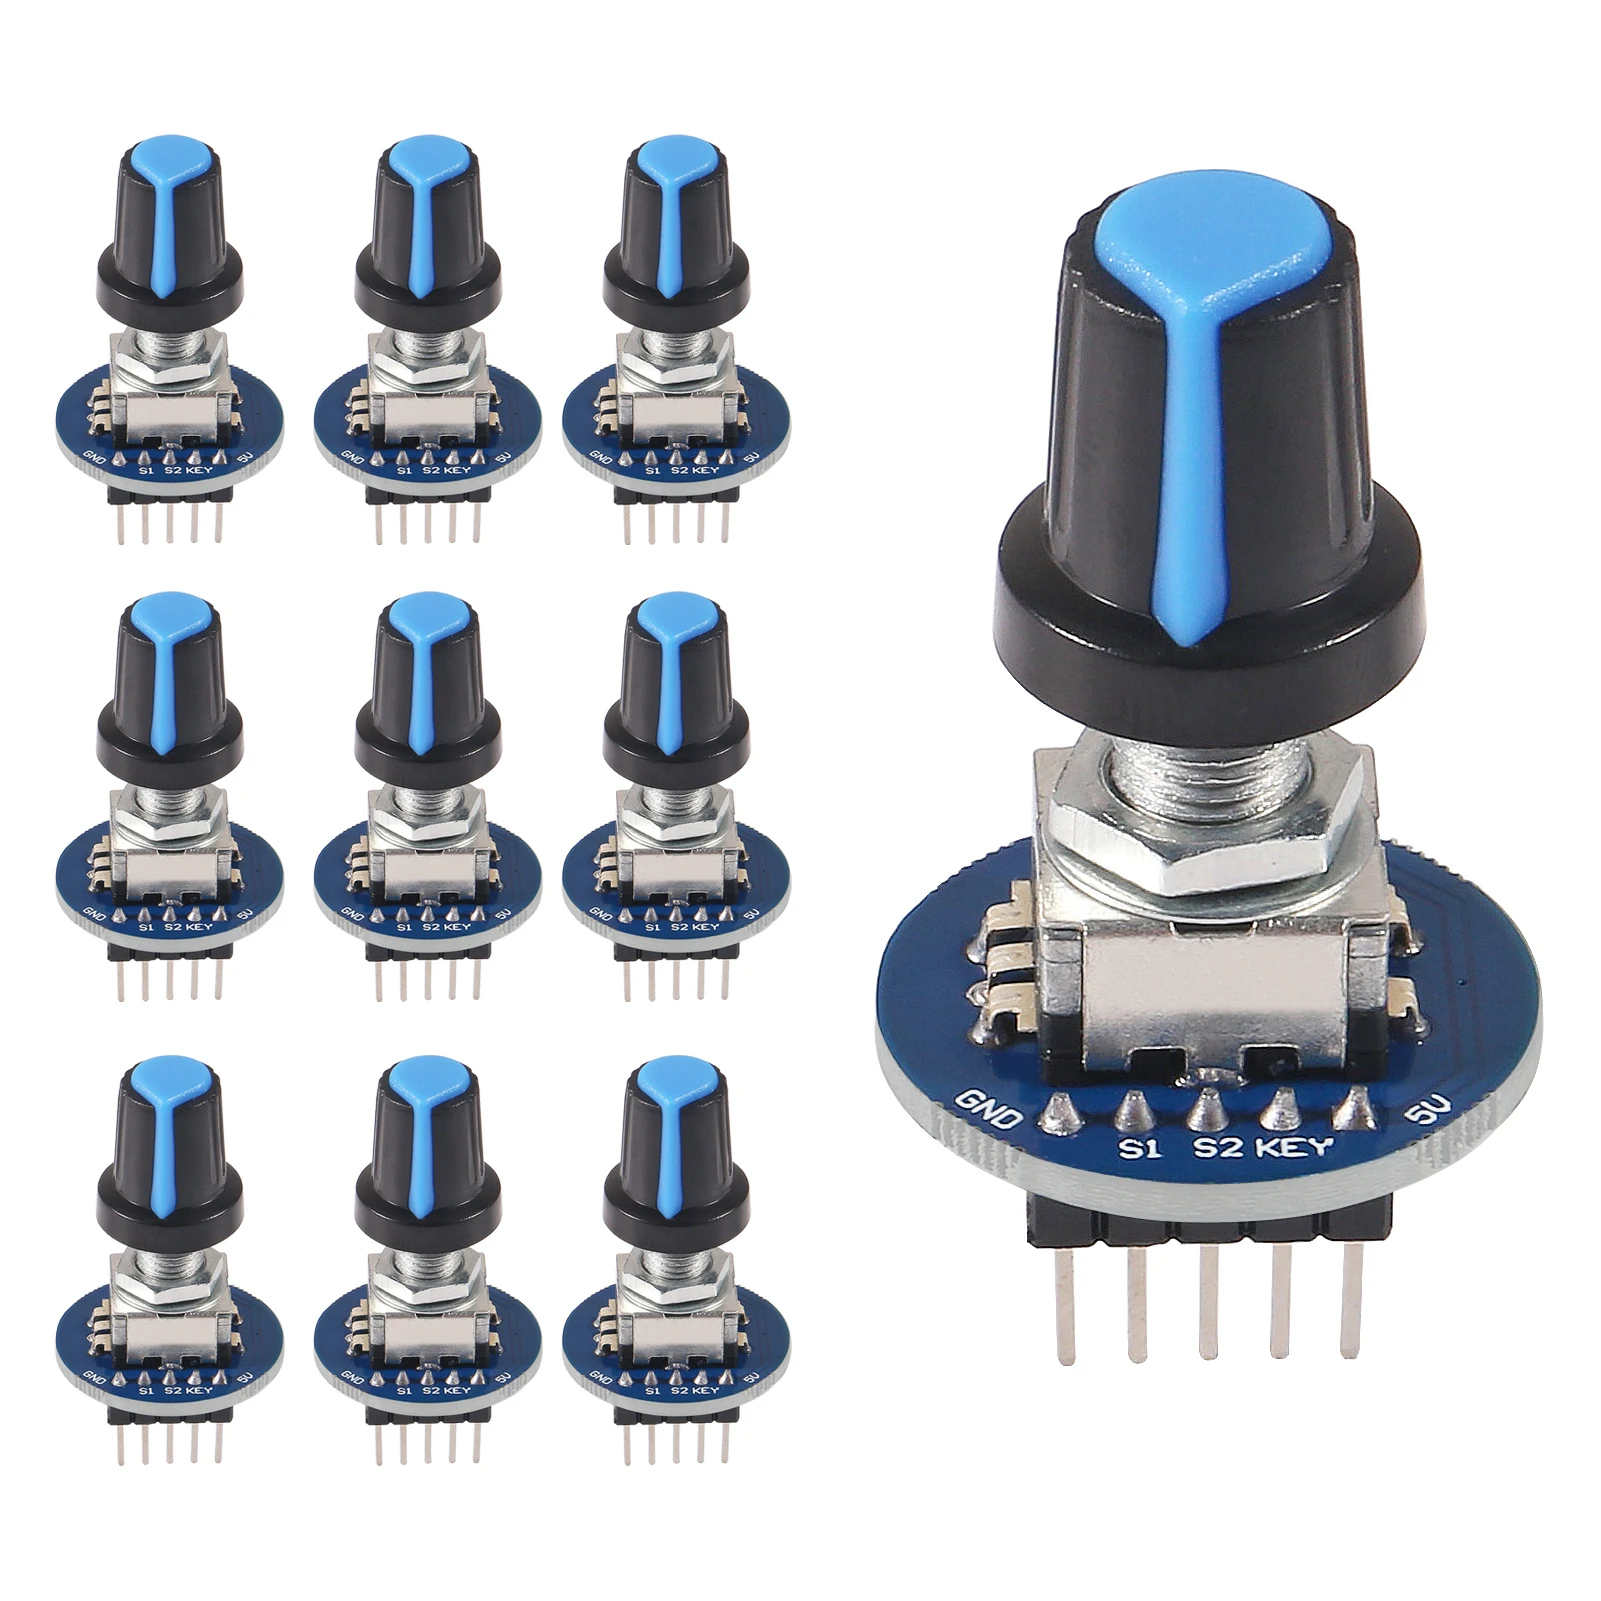 

10pcs/lot Rotary Encoder Module for Arduino Brick Sensor Development Round Audio Rotating Potentiometer Knob Cap EC11